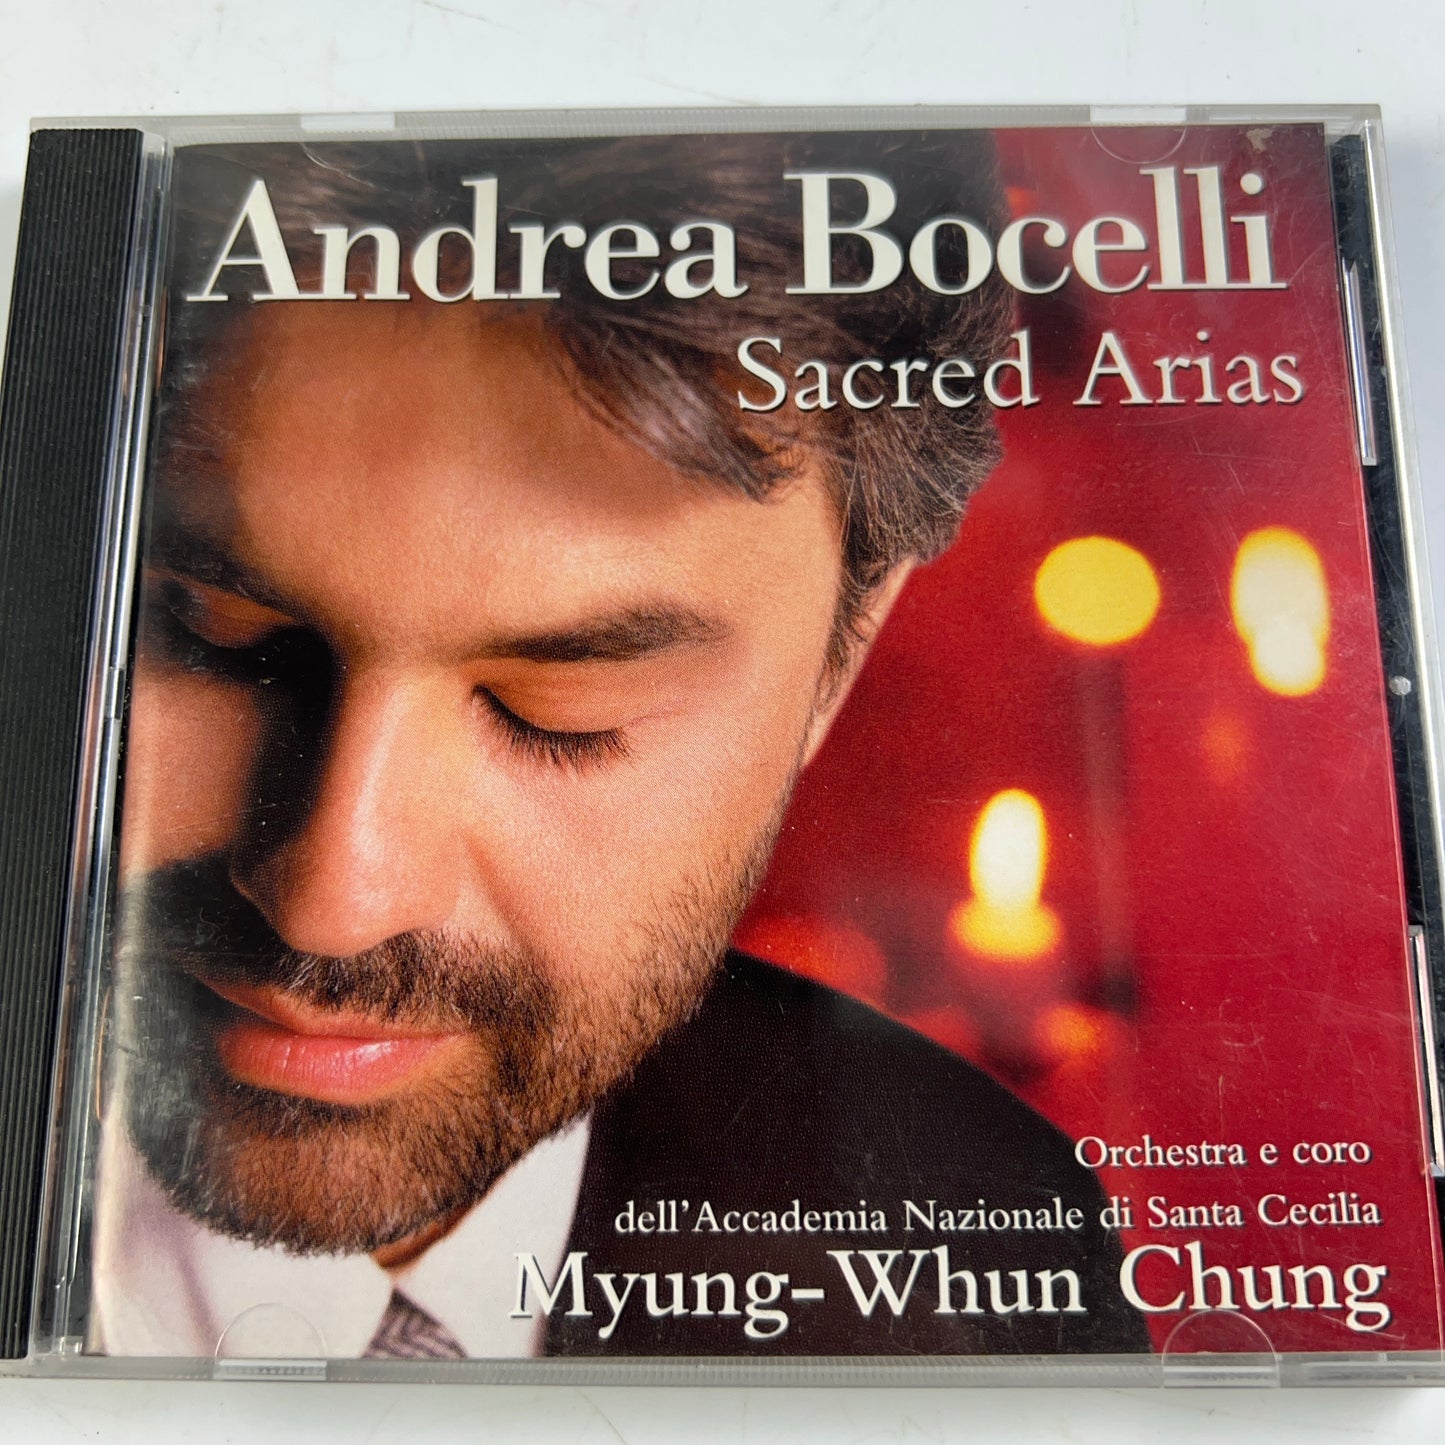 Andrea Bocelli : Sacred Arias (CD) Myung-Whun Chung conductor